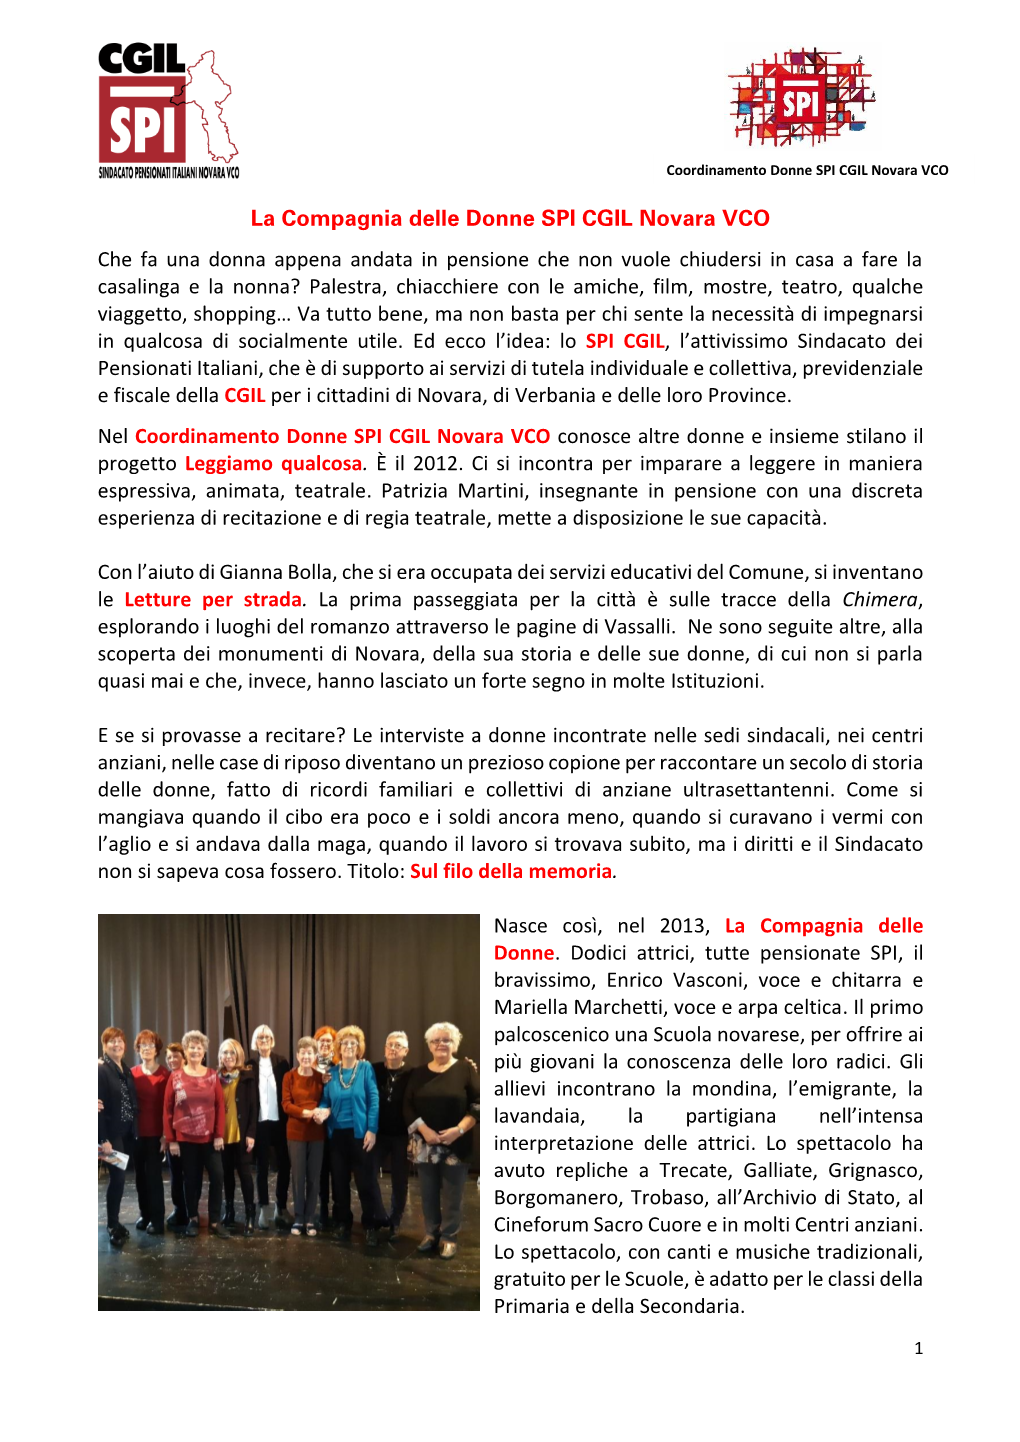 La Compagnia Delle Donne SPI CGIL Novara VCO